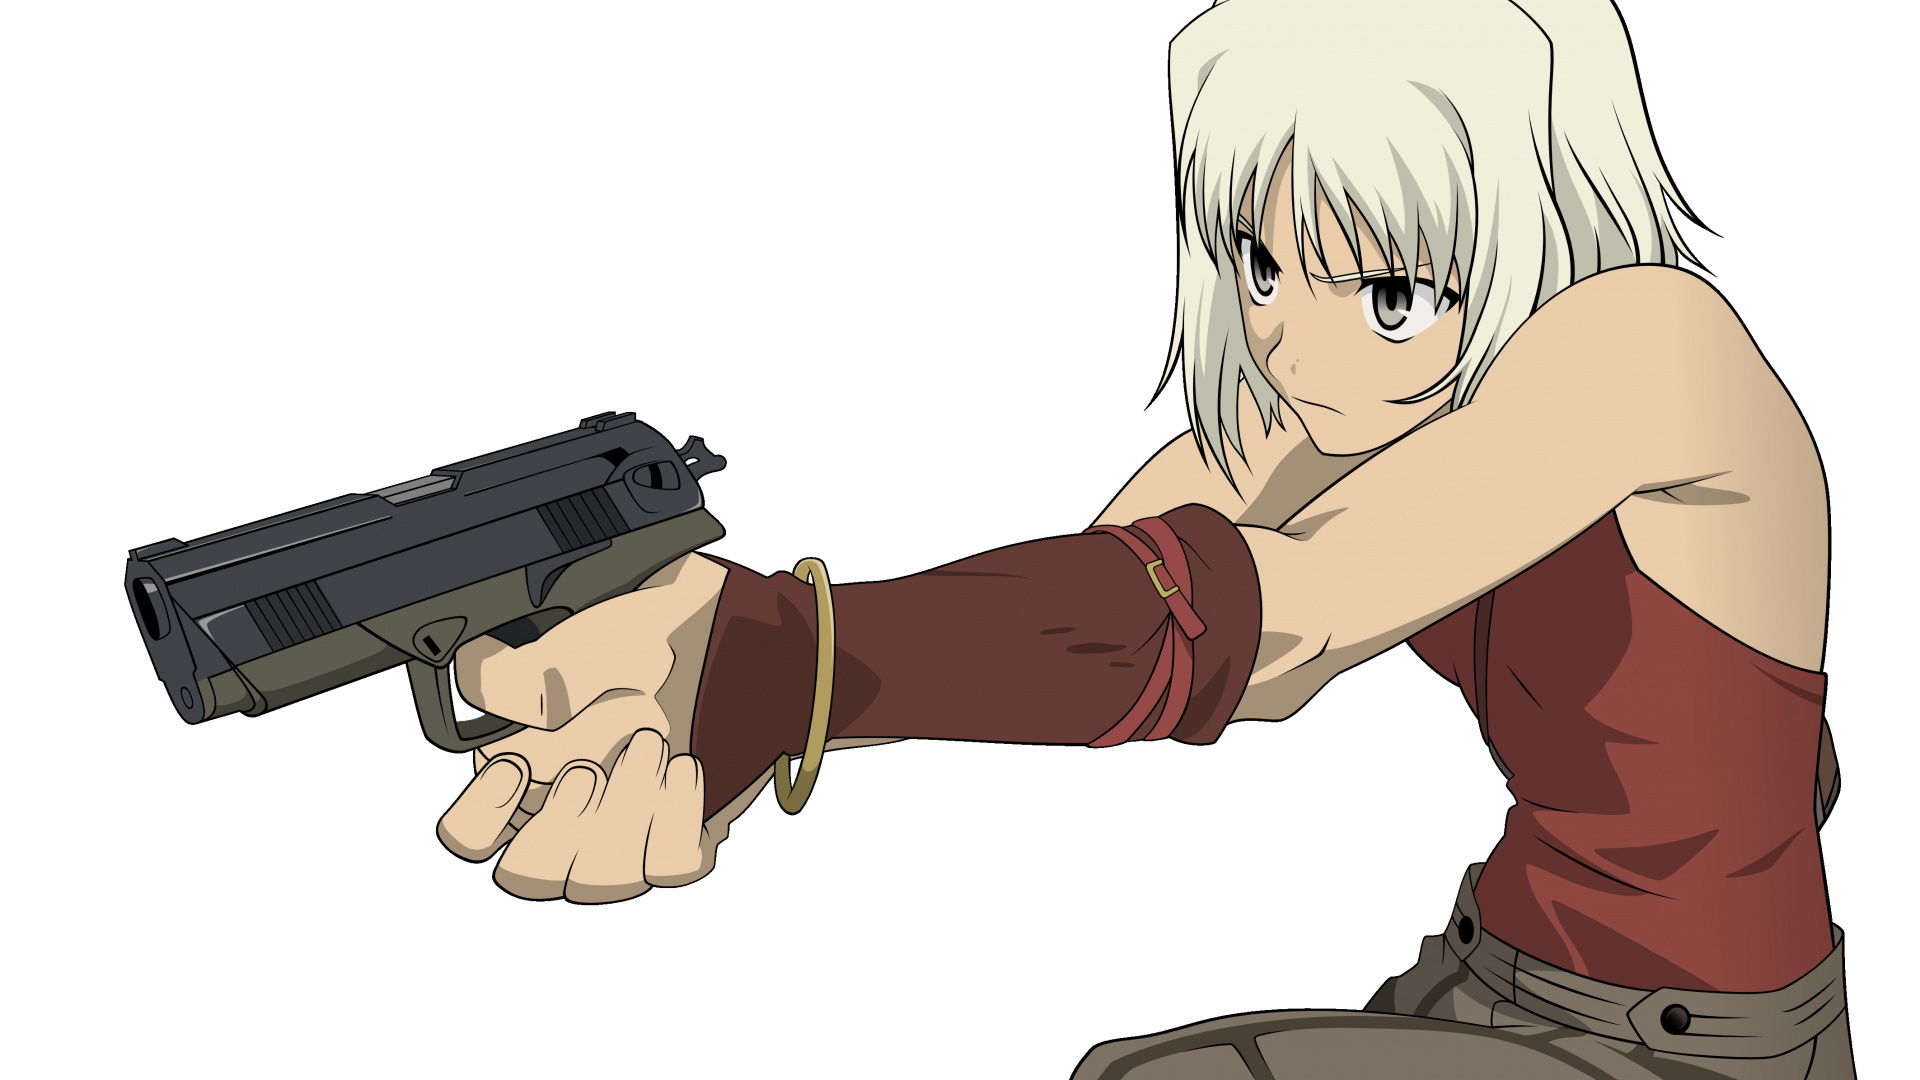 Personaje de Anime Masculino de Pelo Rubio Sosteniendo Una Pistola Semiautomática Negra. Wallpaper in 1920x1080 Resolution